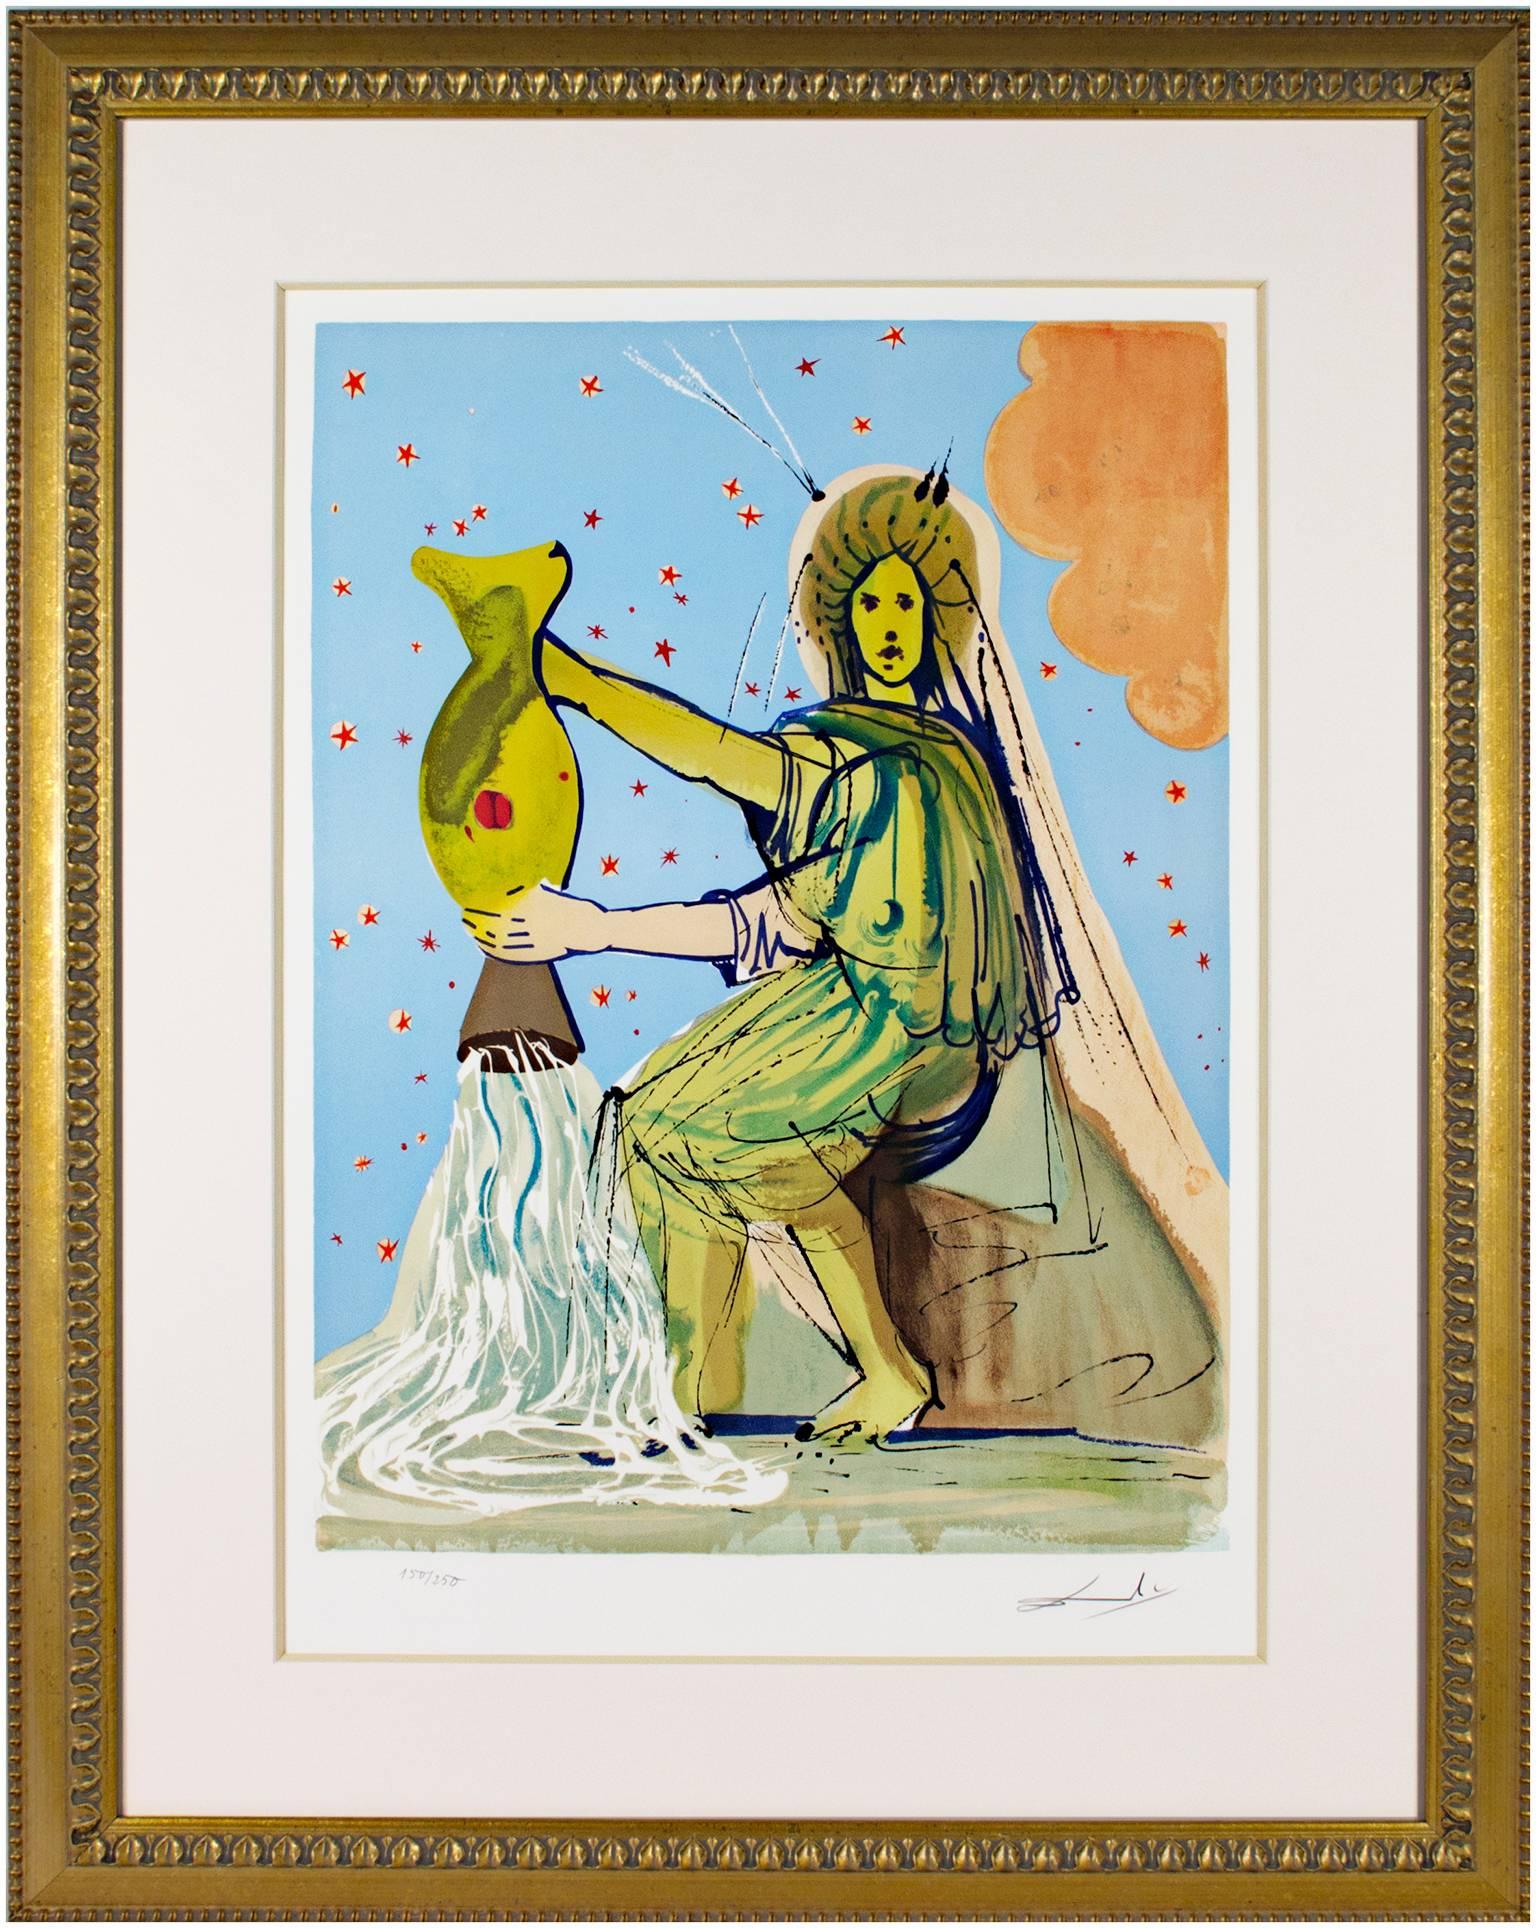 Signs of the Zodiac Series: Aquarius - Print by Salvador Dalí